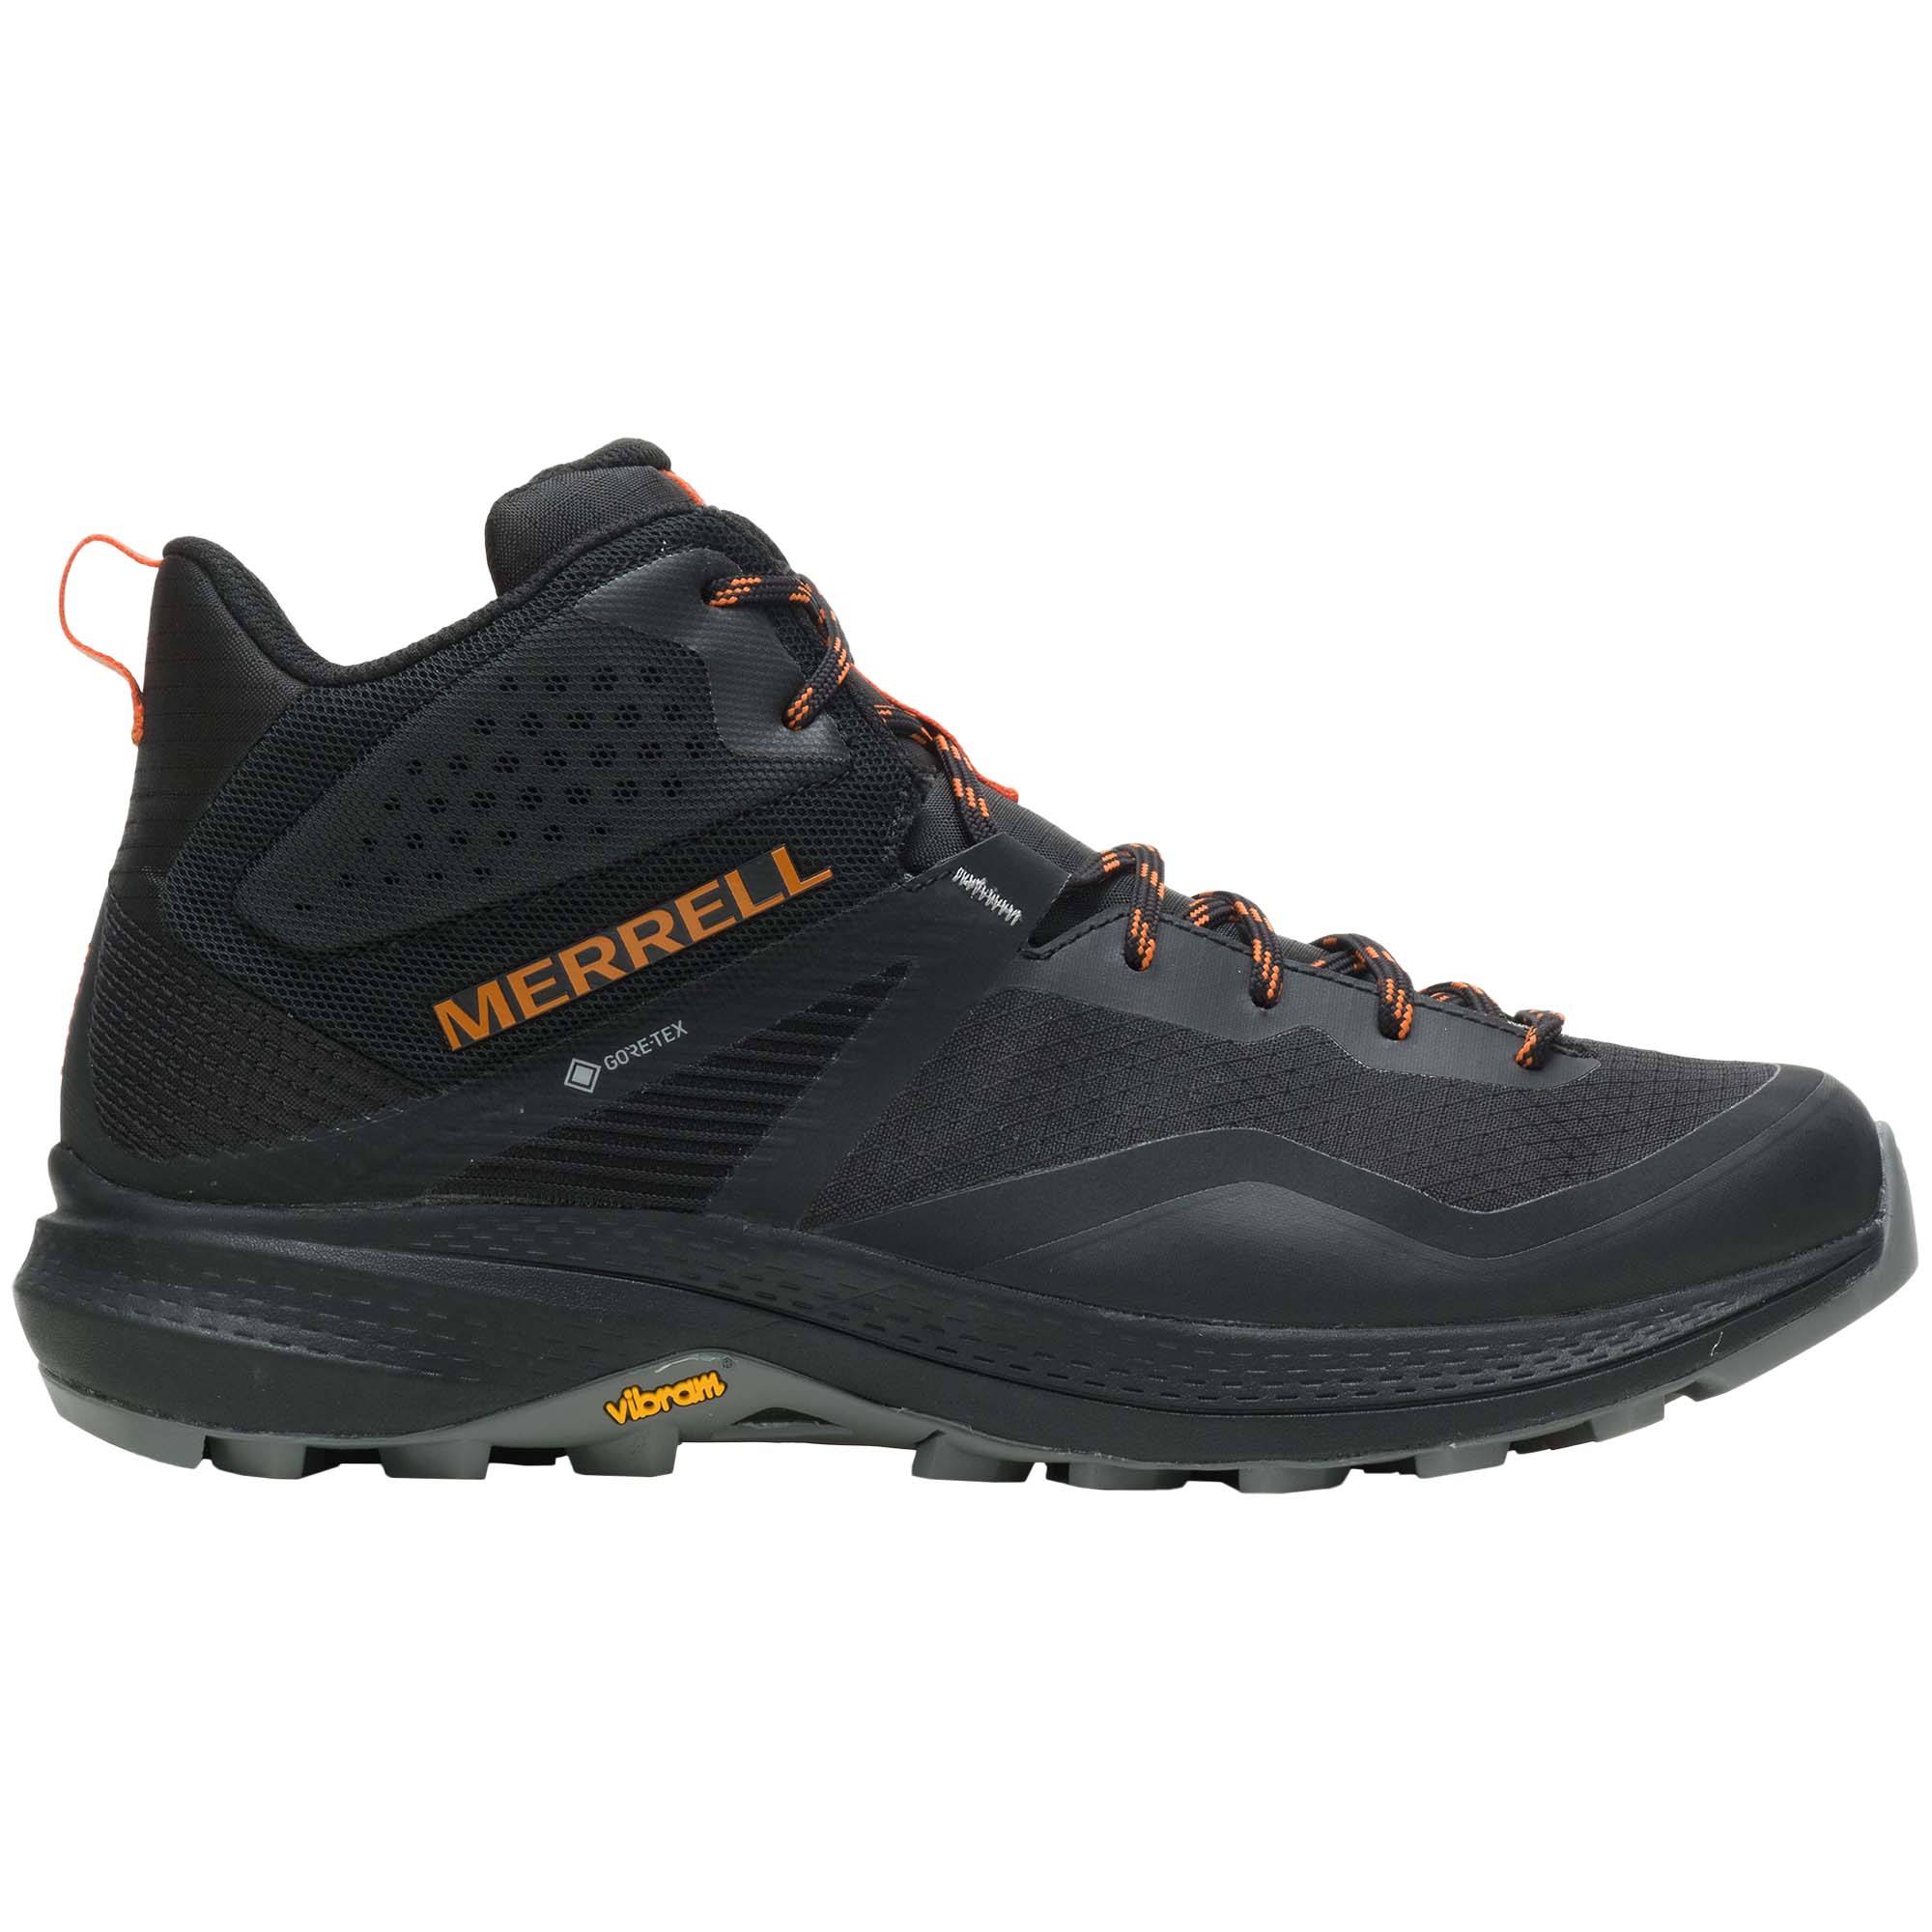 Merrell MQM 3 Mid GTX Men's Hiking Boots